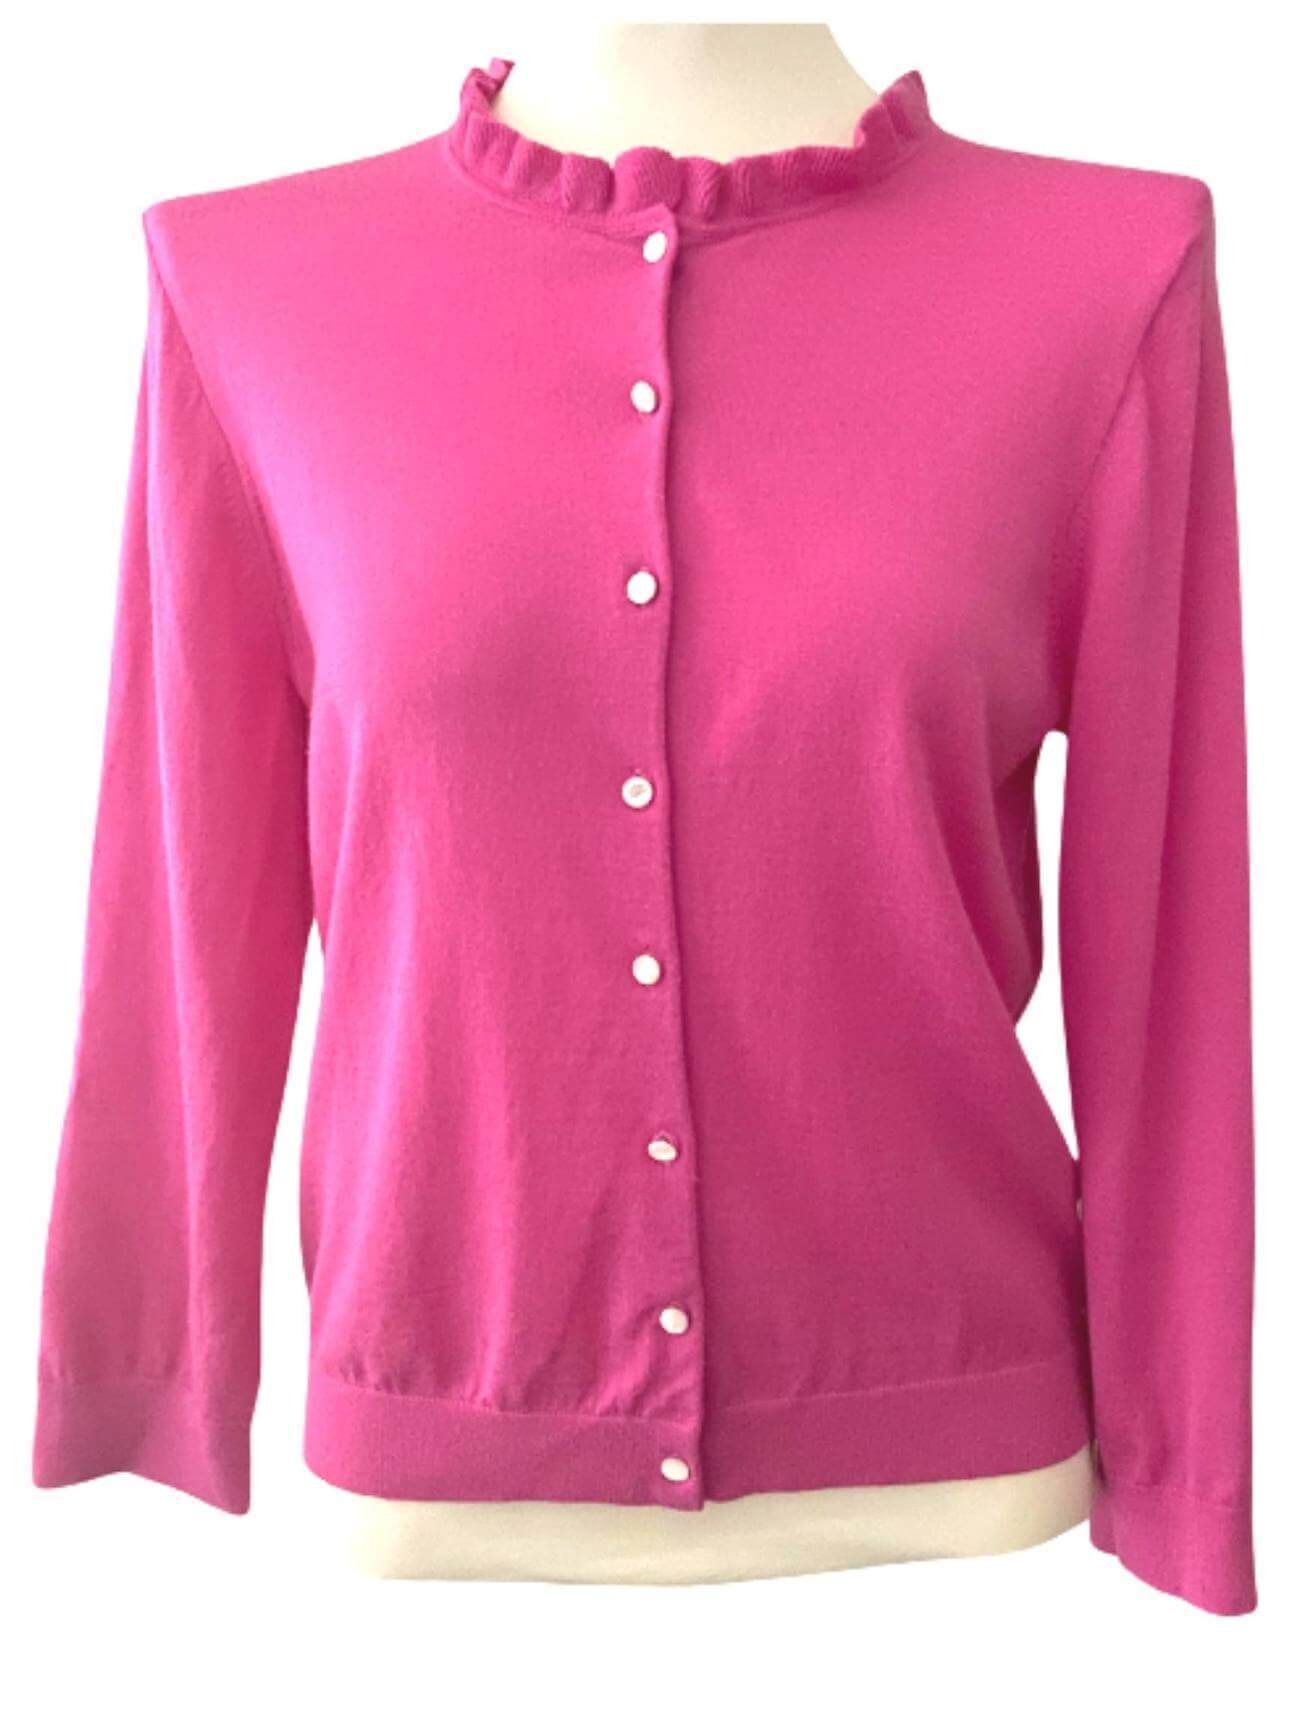 Cool Summer J.CREW pink wool cardigan sweater